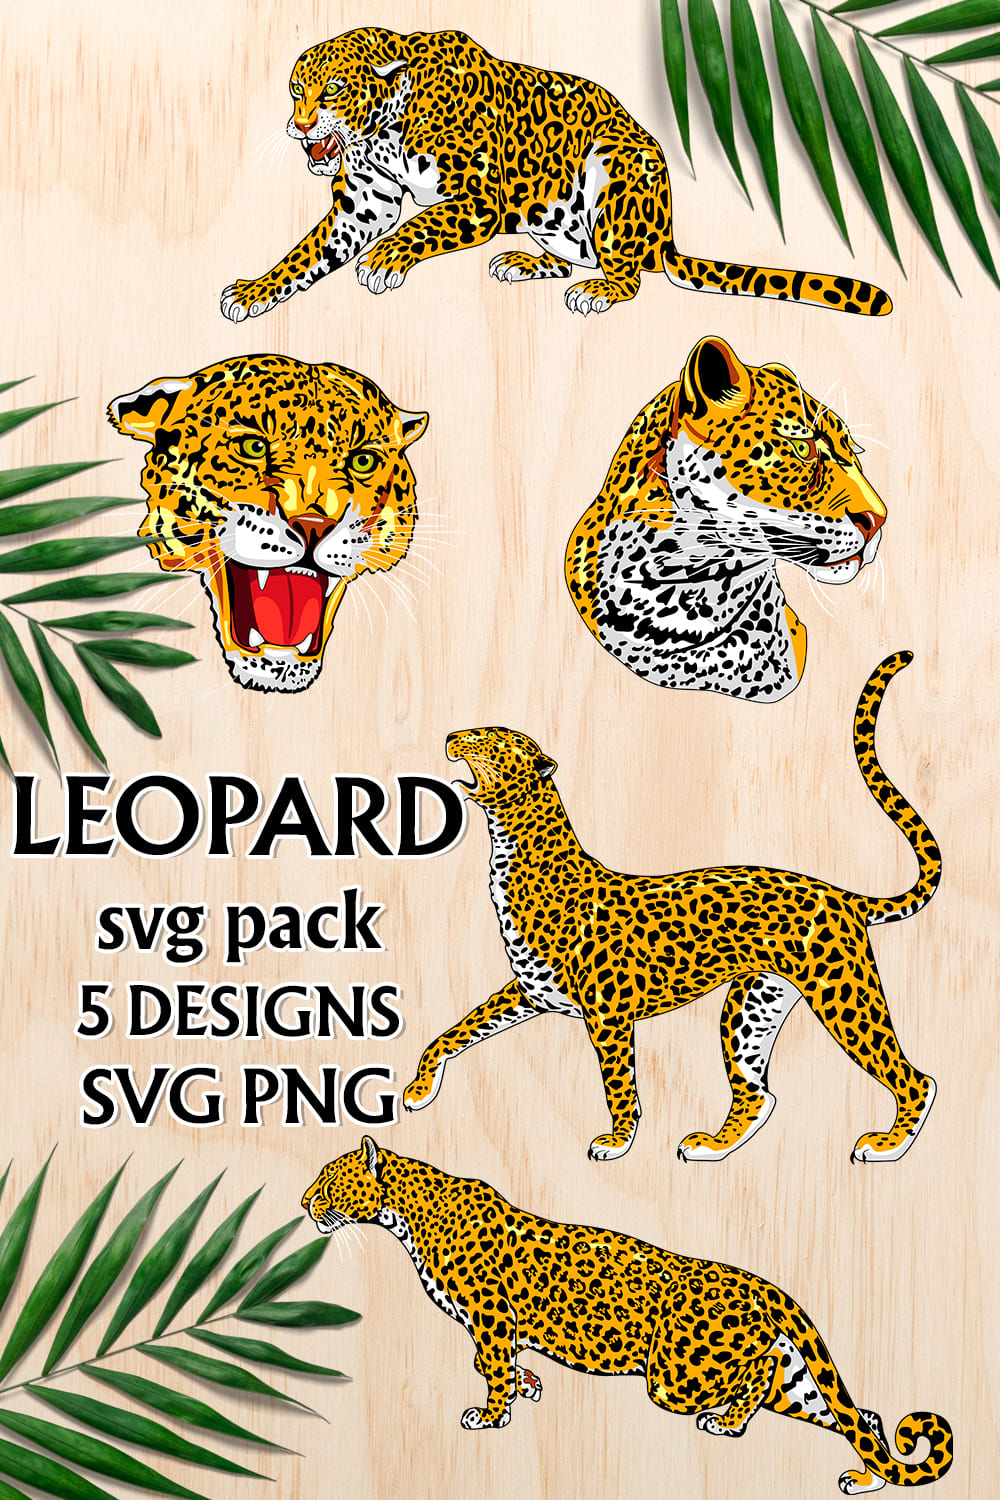 Leopard Svg - Pinterest.